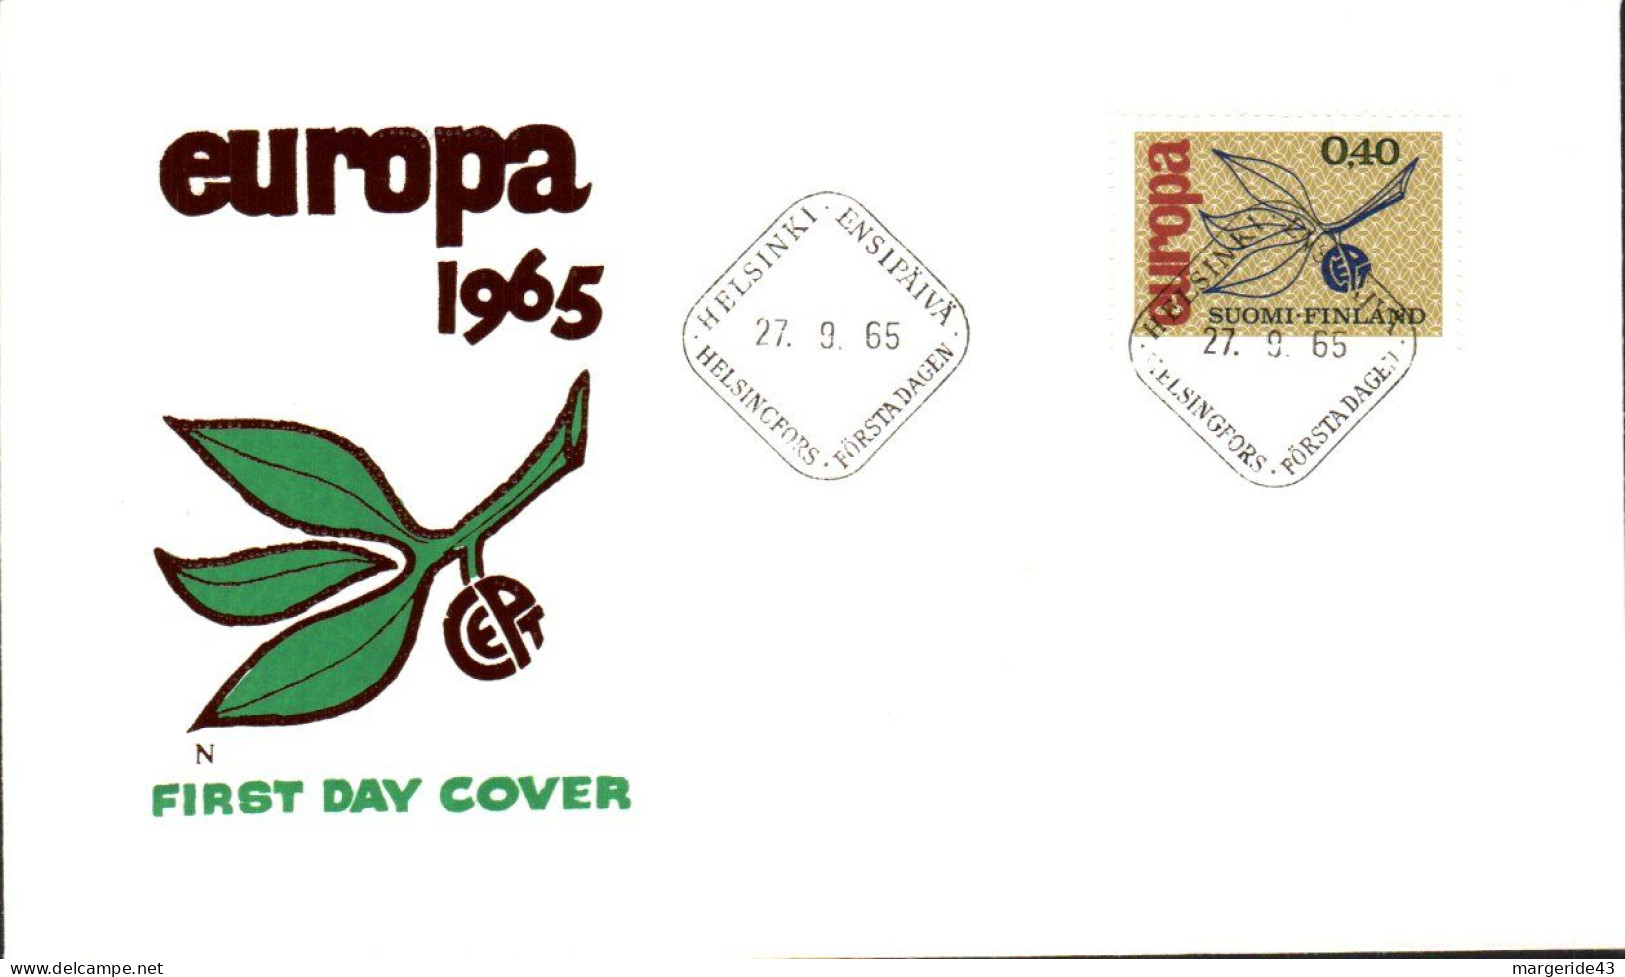 EUROPA 1965 FINLANDE FDC - 1965